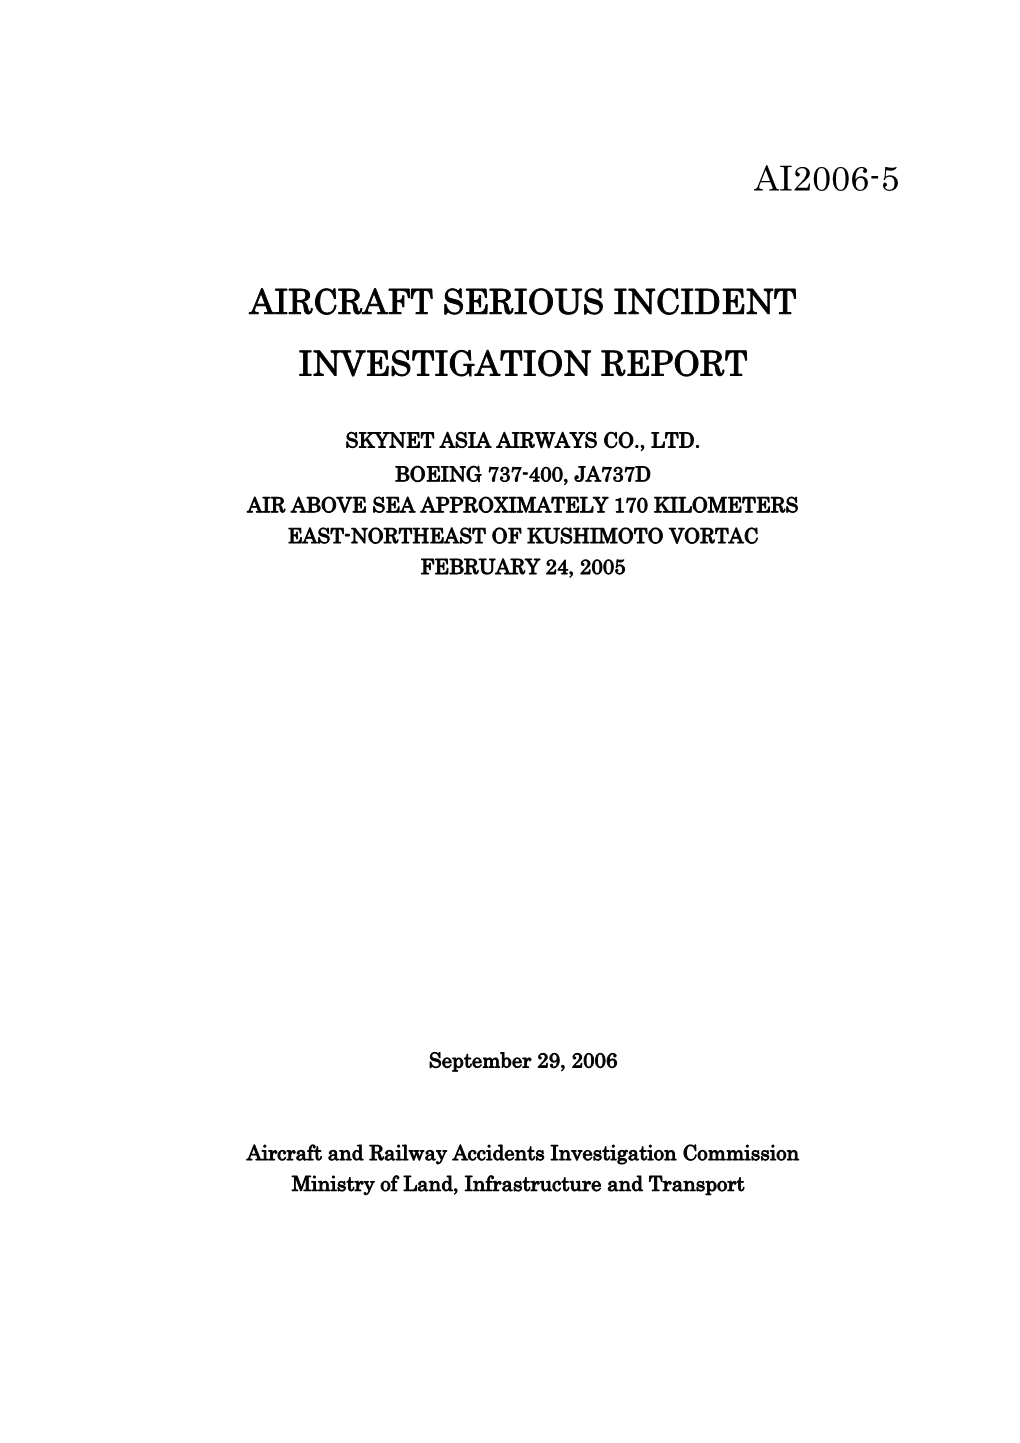 Ai2006-5 Aircraft Serious Incident Investigation Report